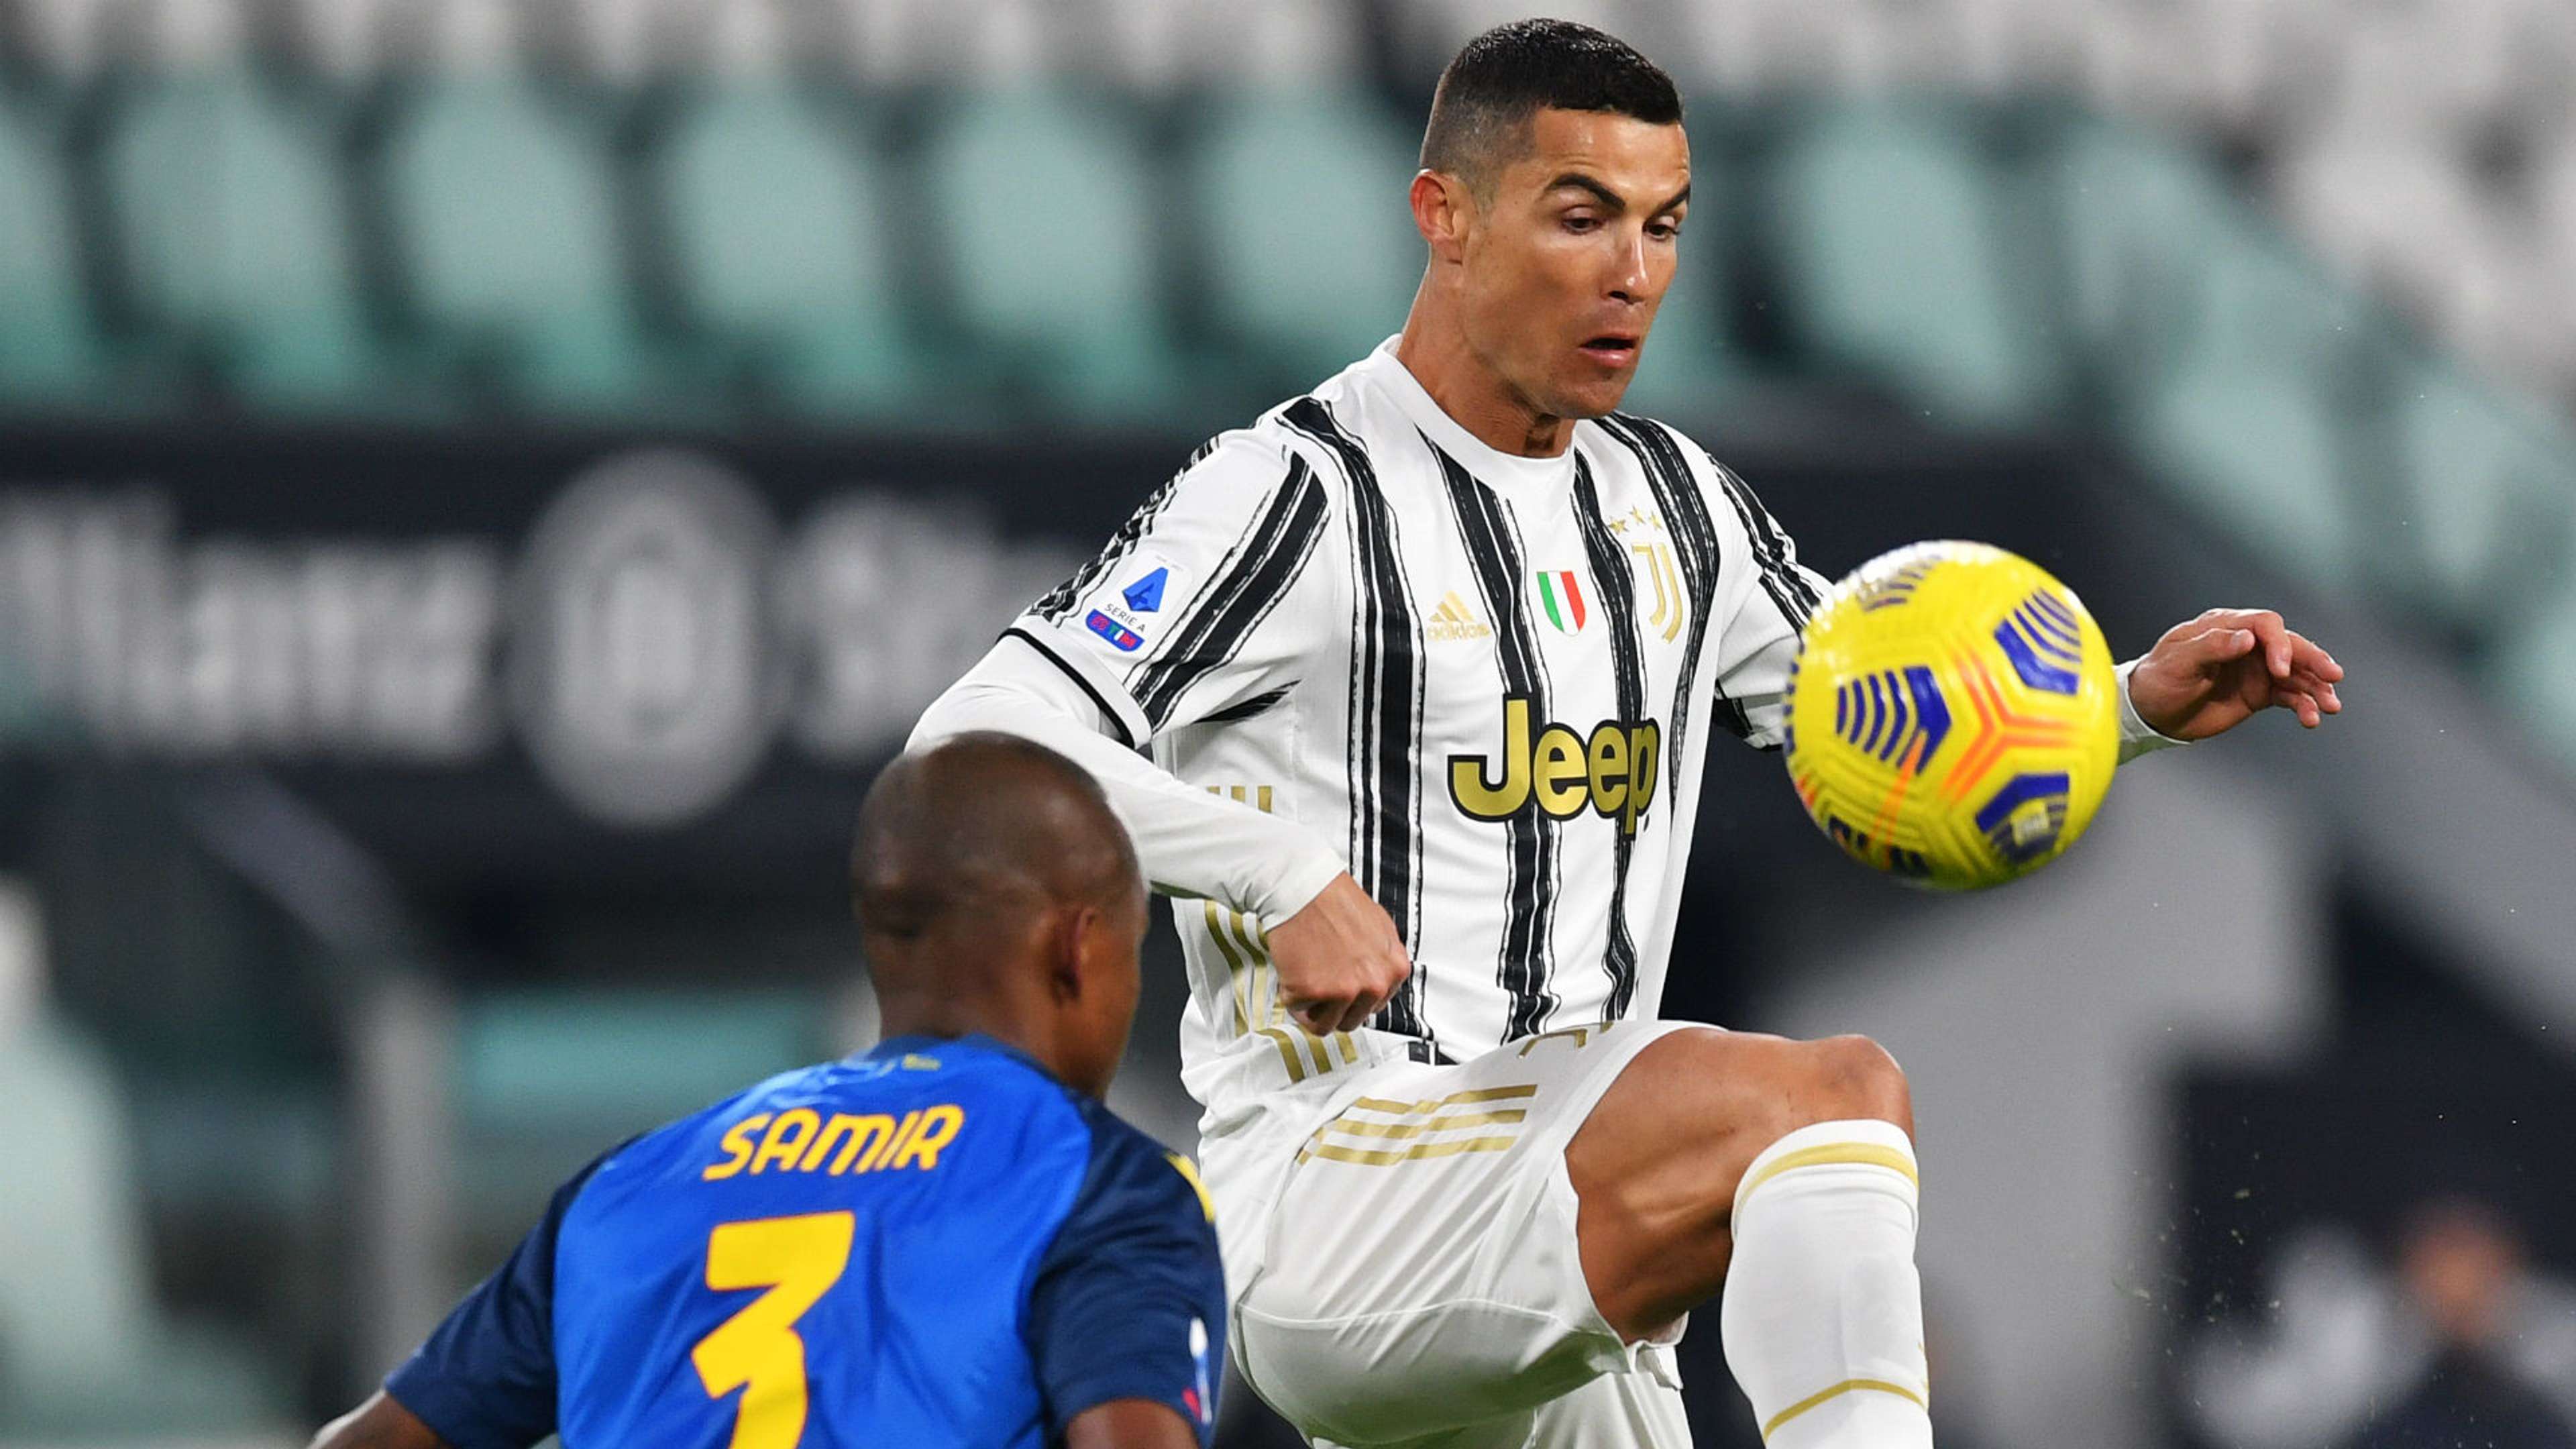 Cristiano Ronaldo Samir Juventus Udinese